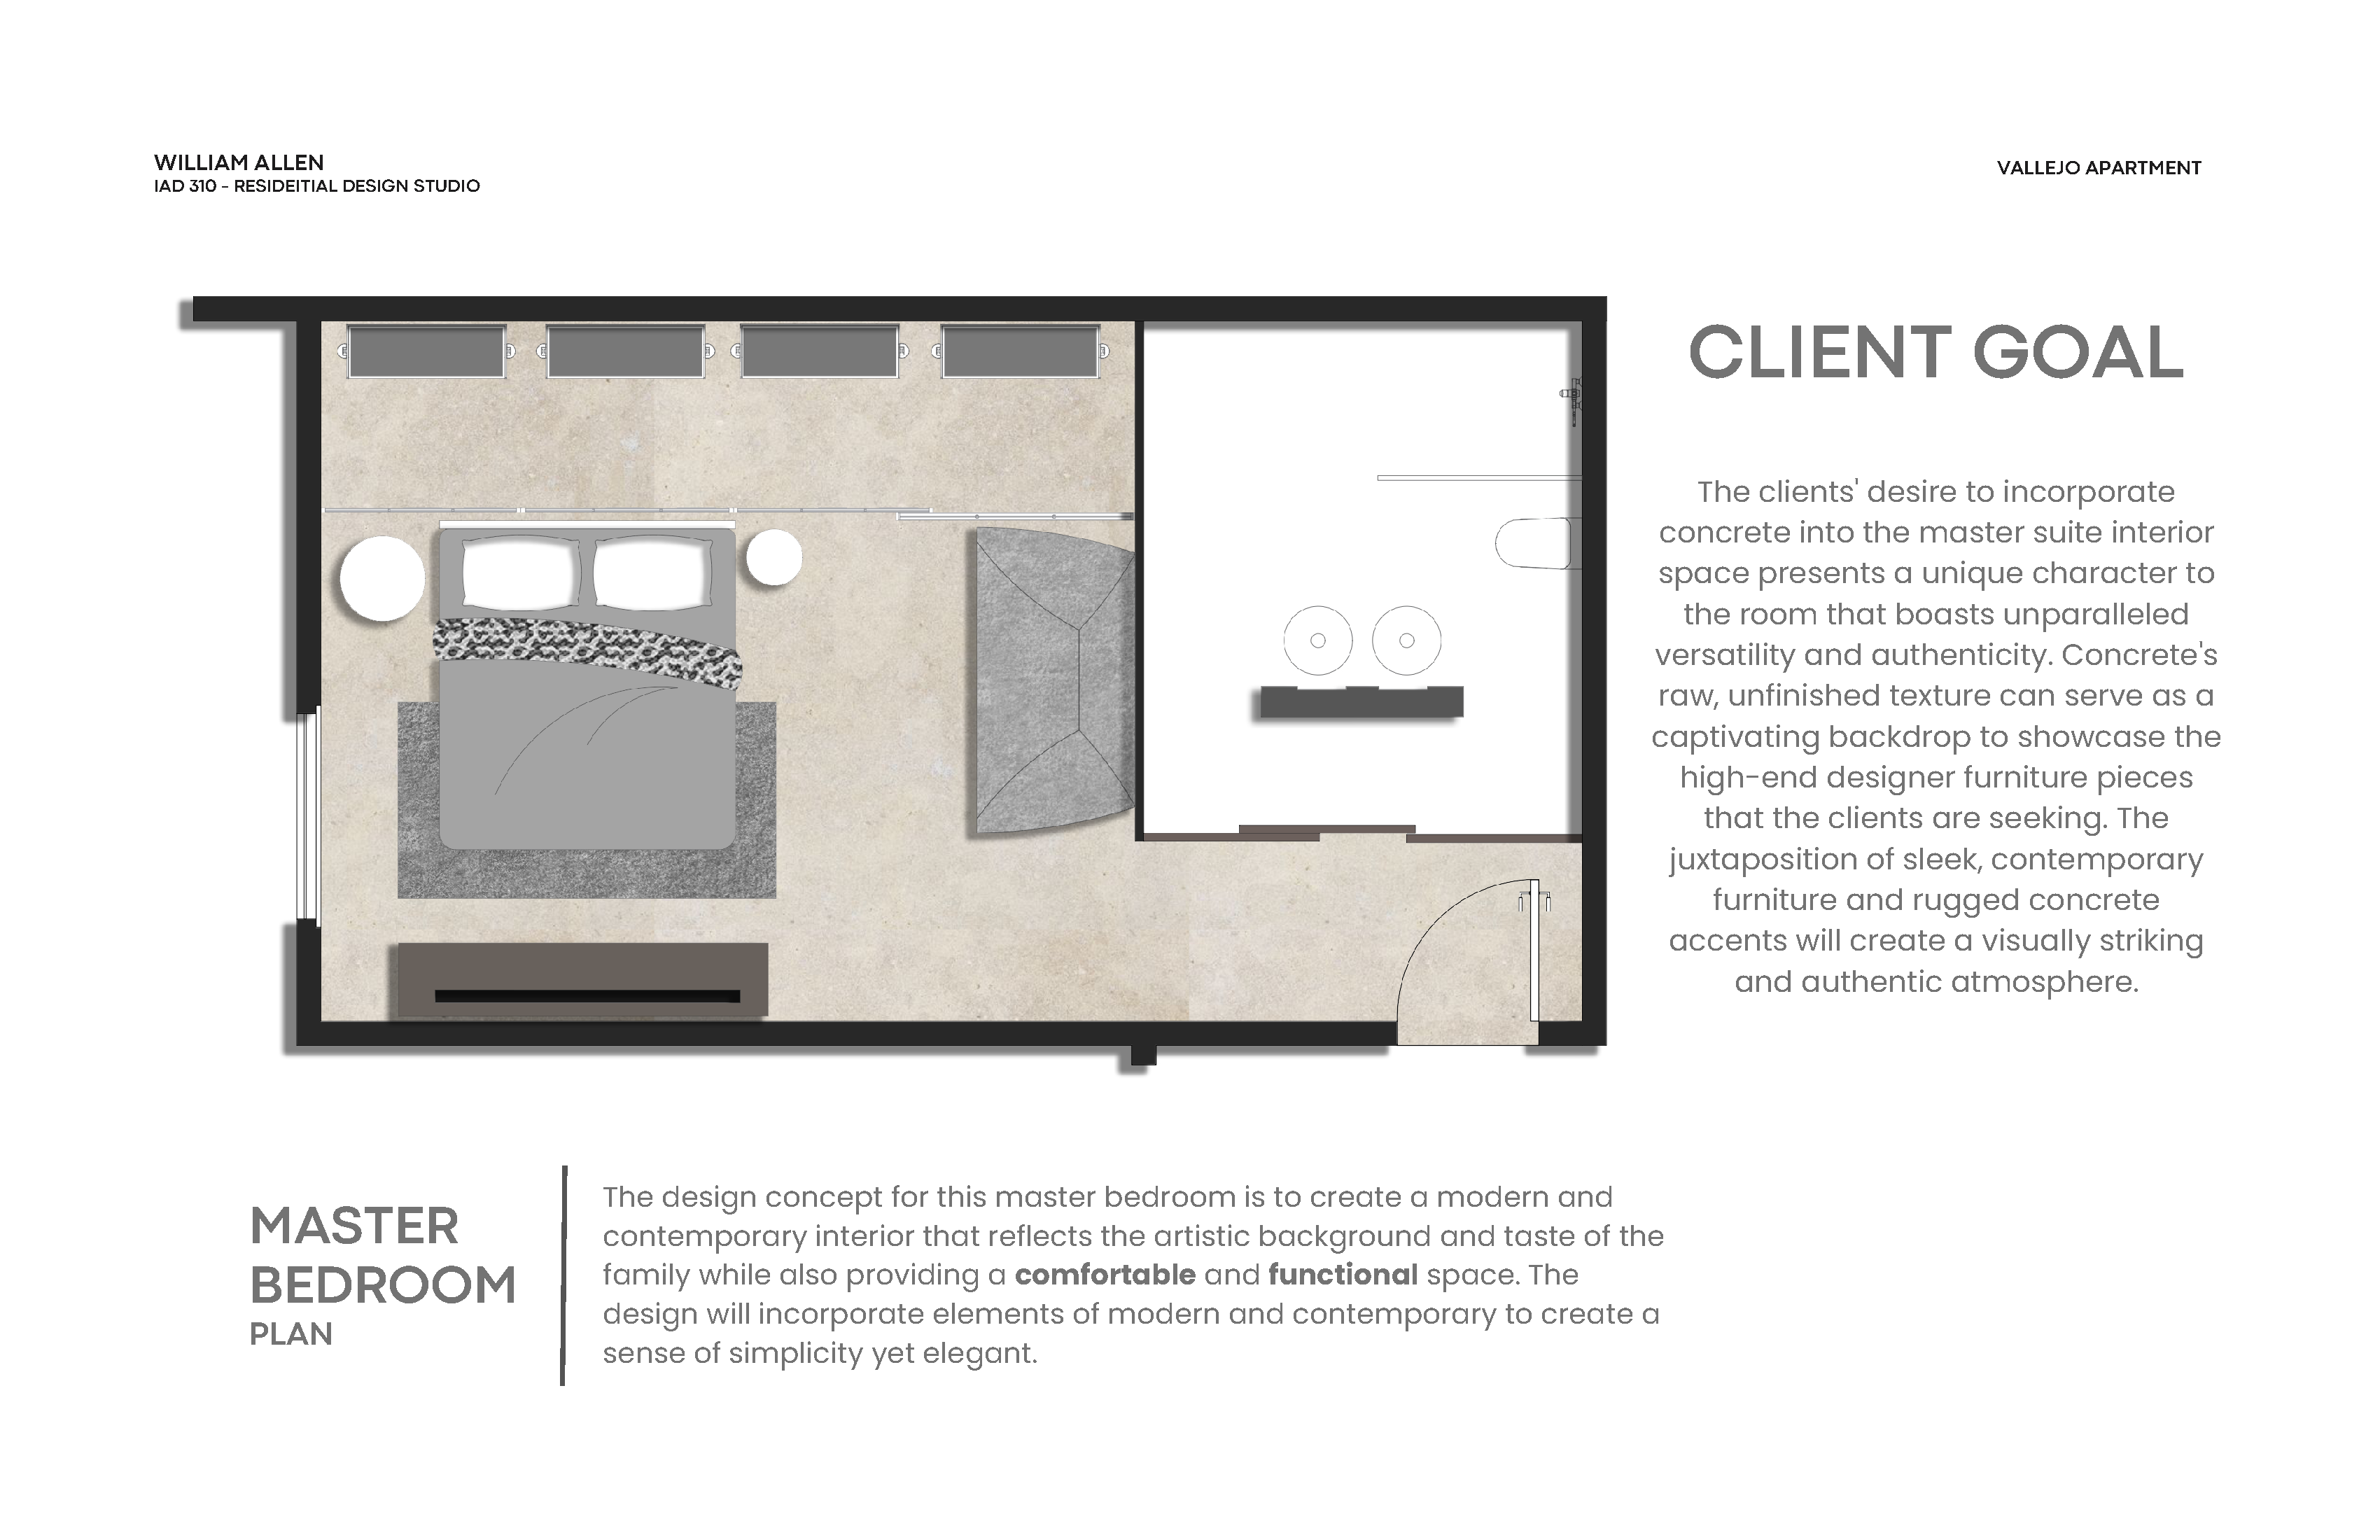 Vallejo Apartment - Master Bedroom Plan - William Allen